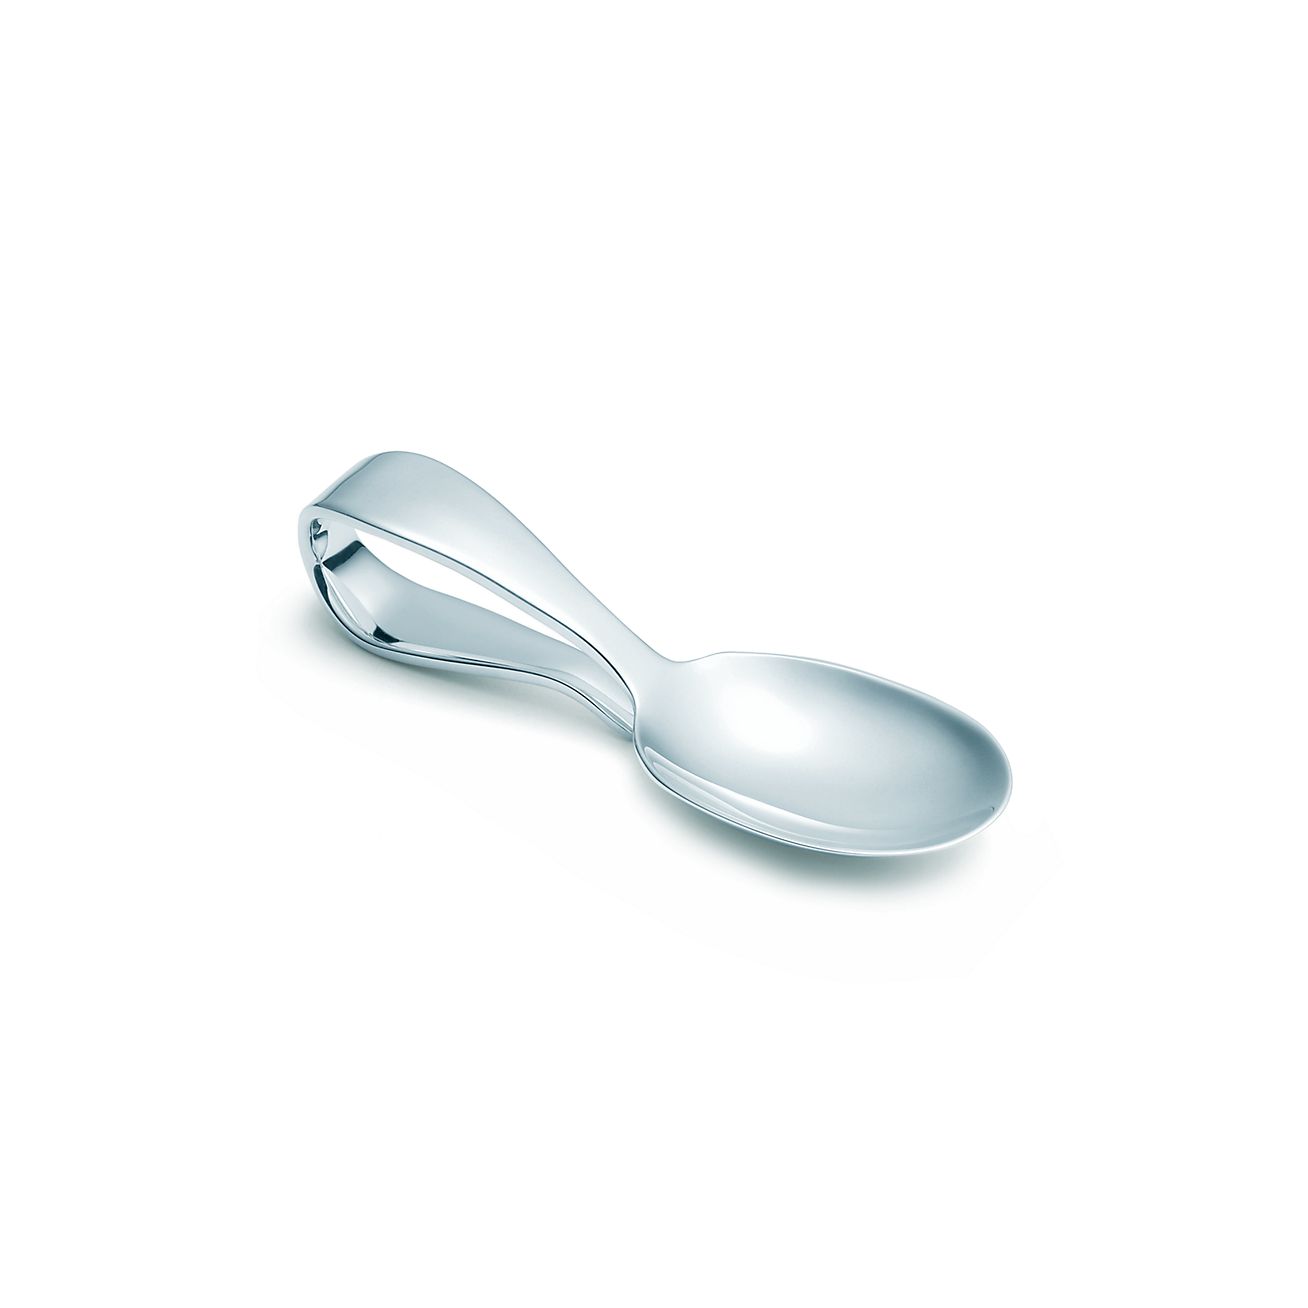 Loop baby spoon in sterling silver. | Tiffany & Co.